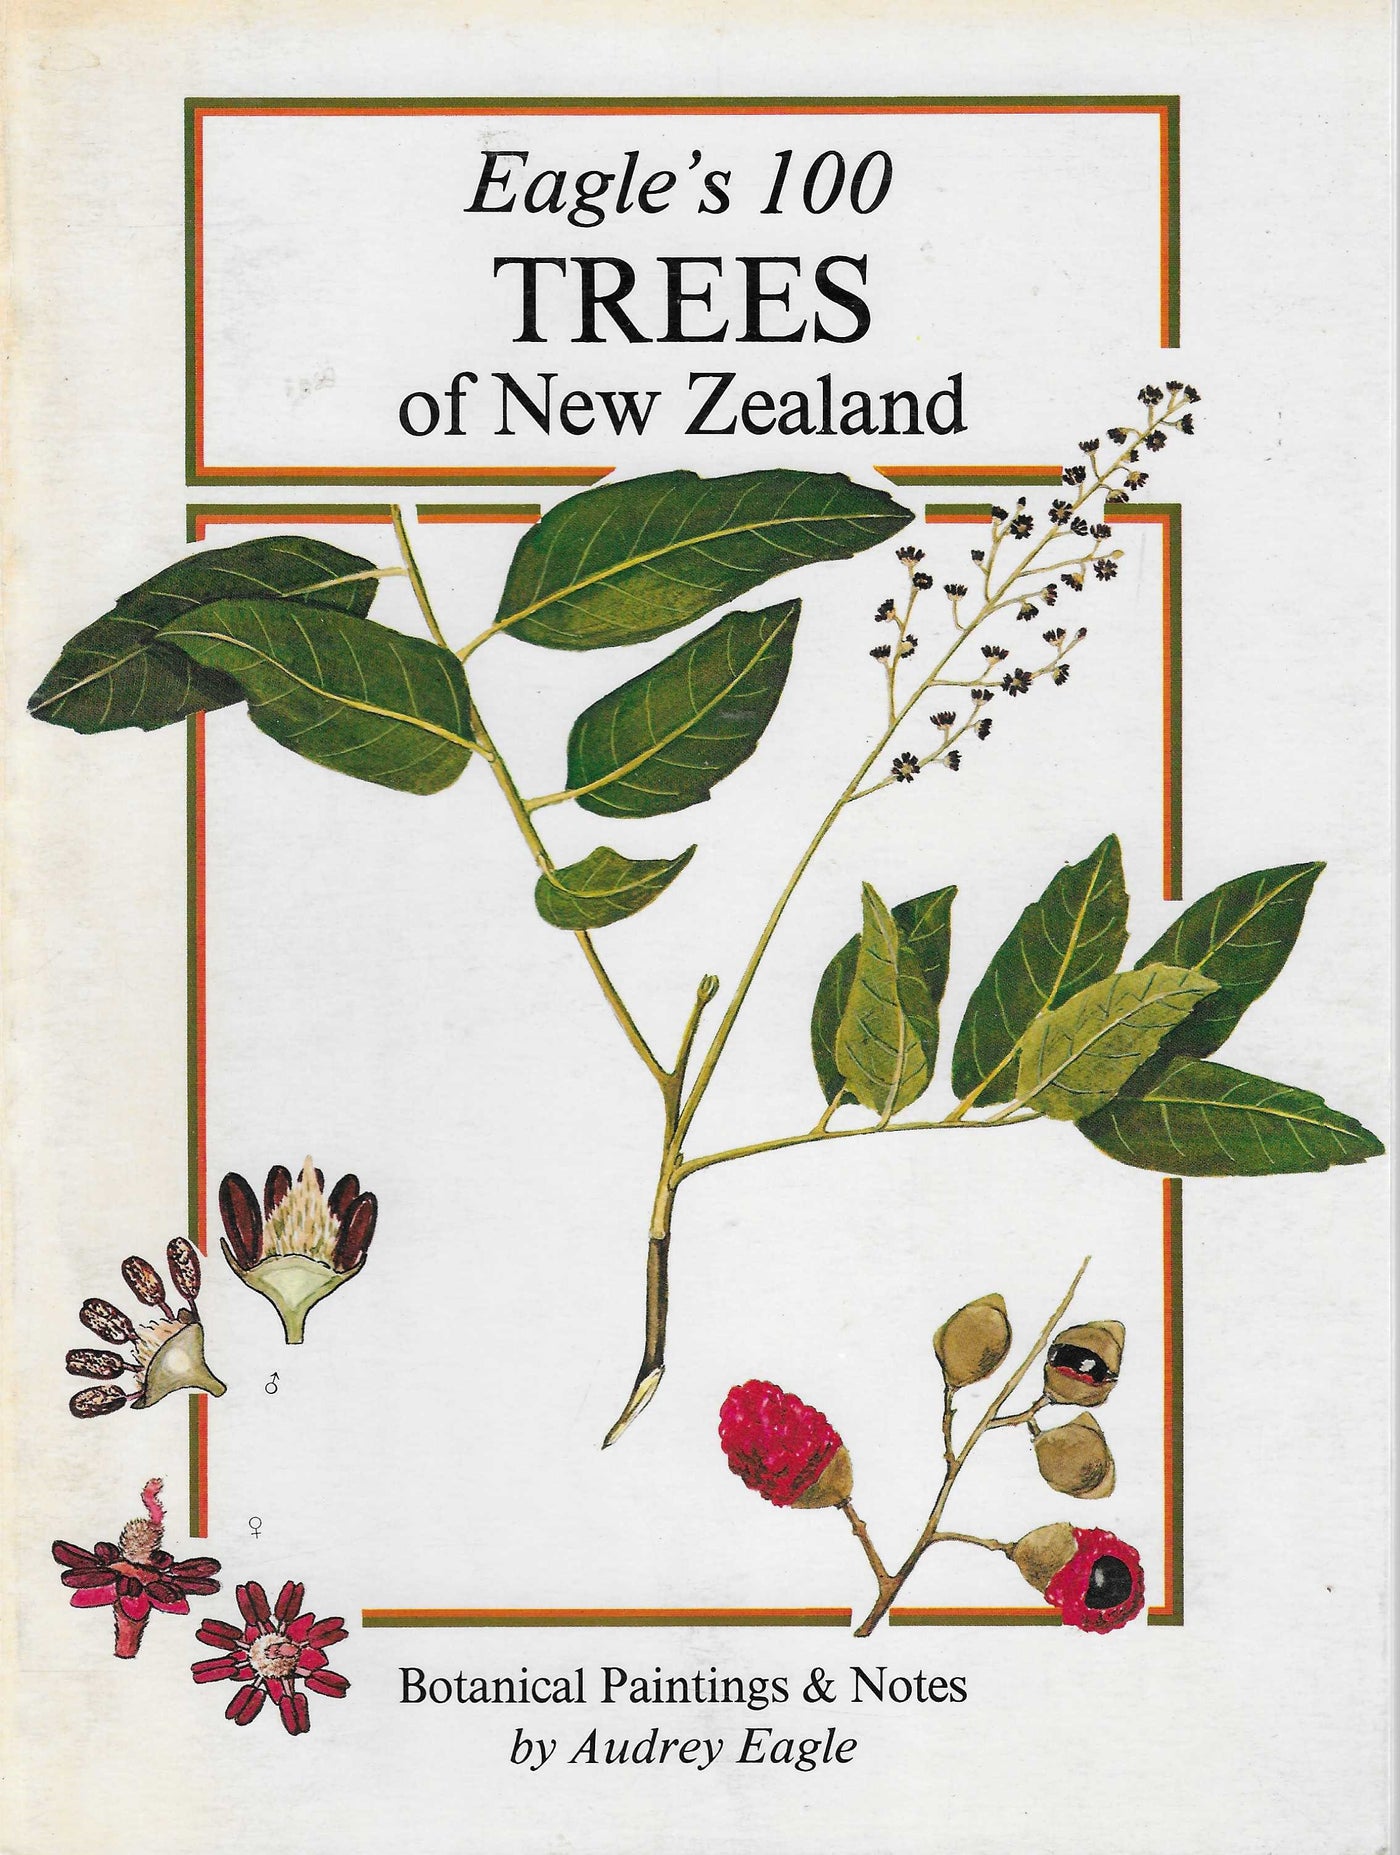 Eagle's 100 Trees of New Zealand